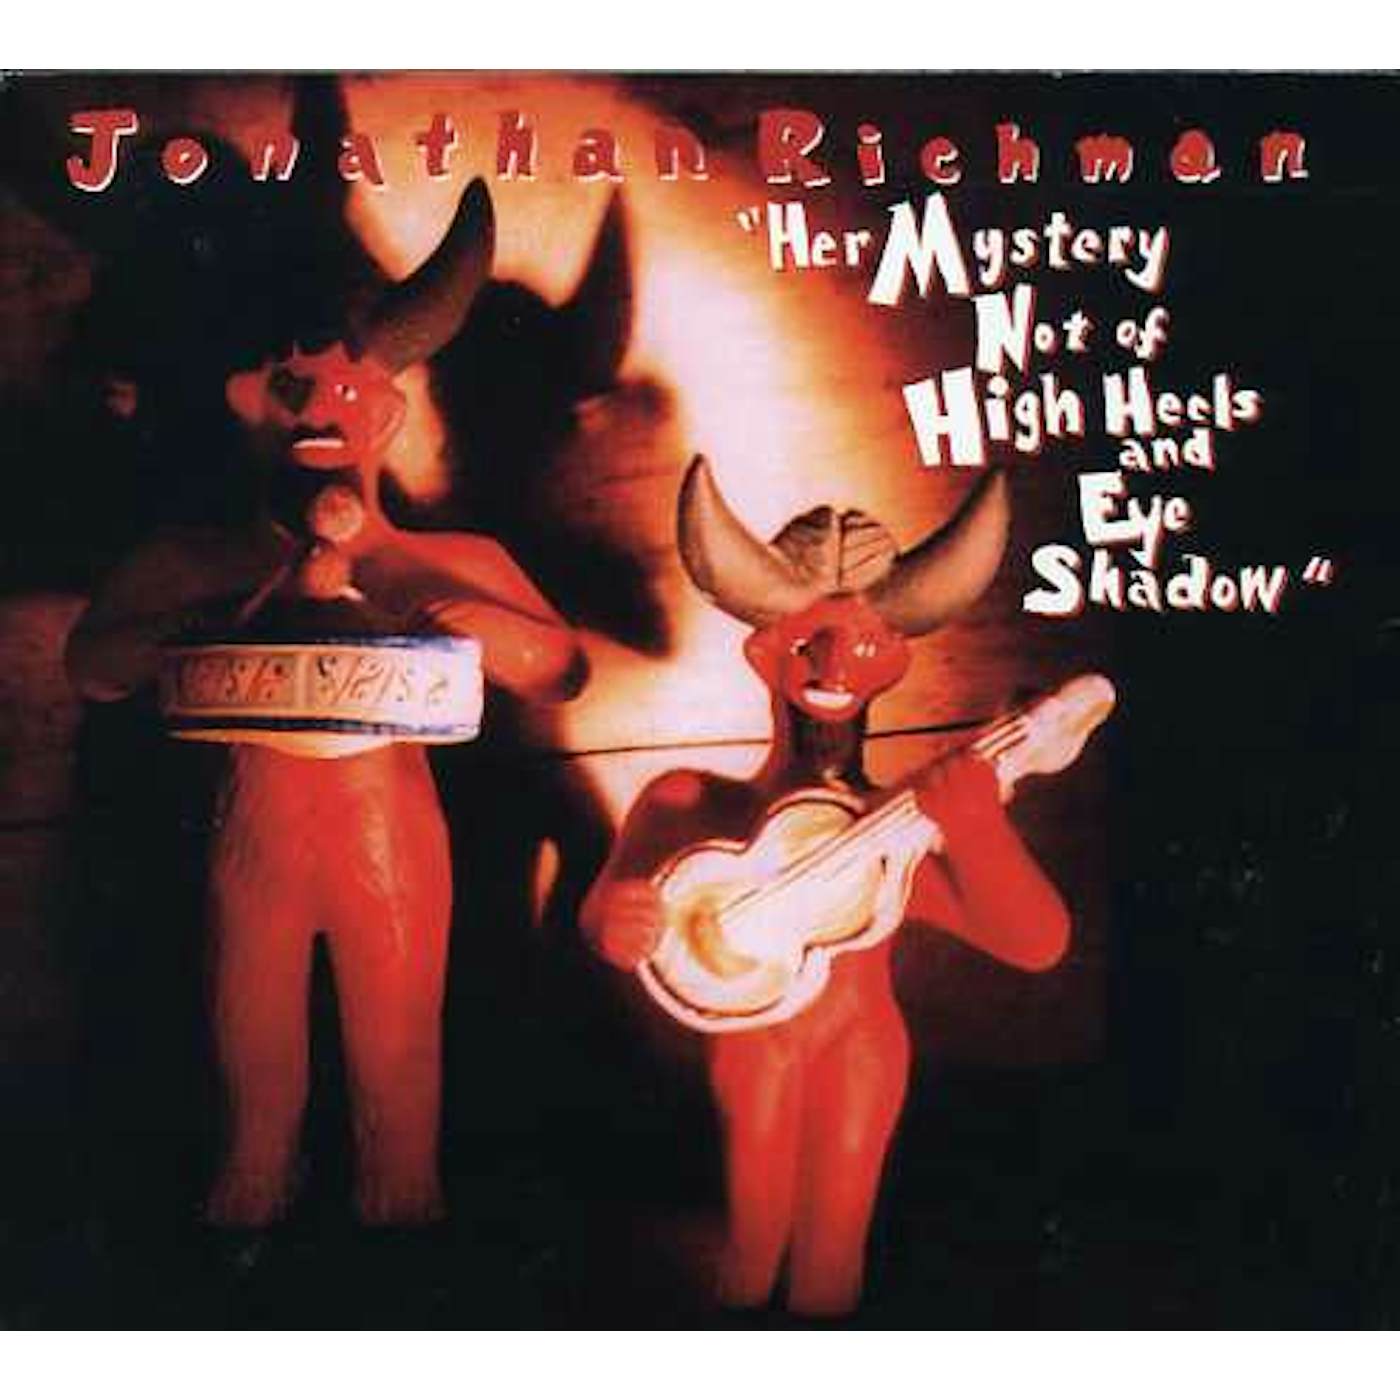 Jonathan Richman HER MYSTERY NOT OF HIGH HEELS & EYE SHADOW CD